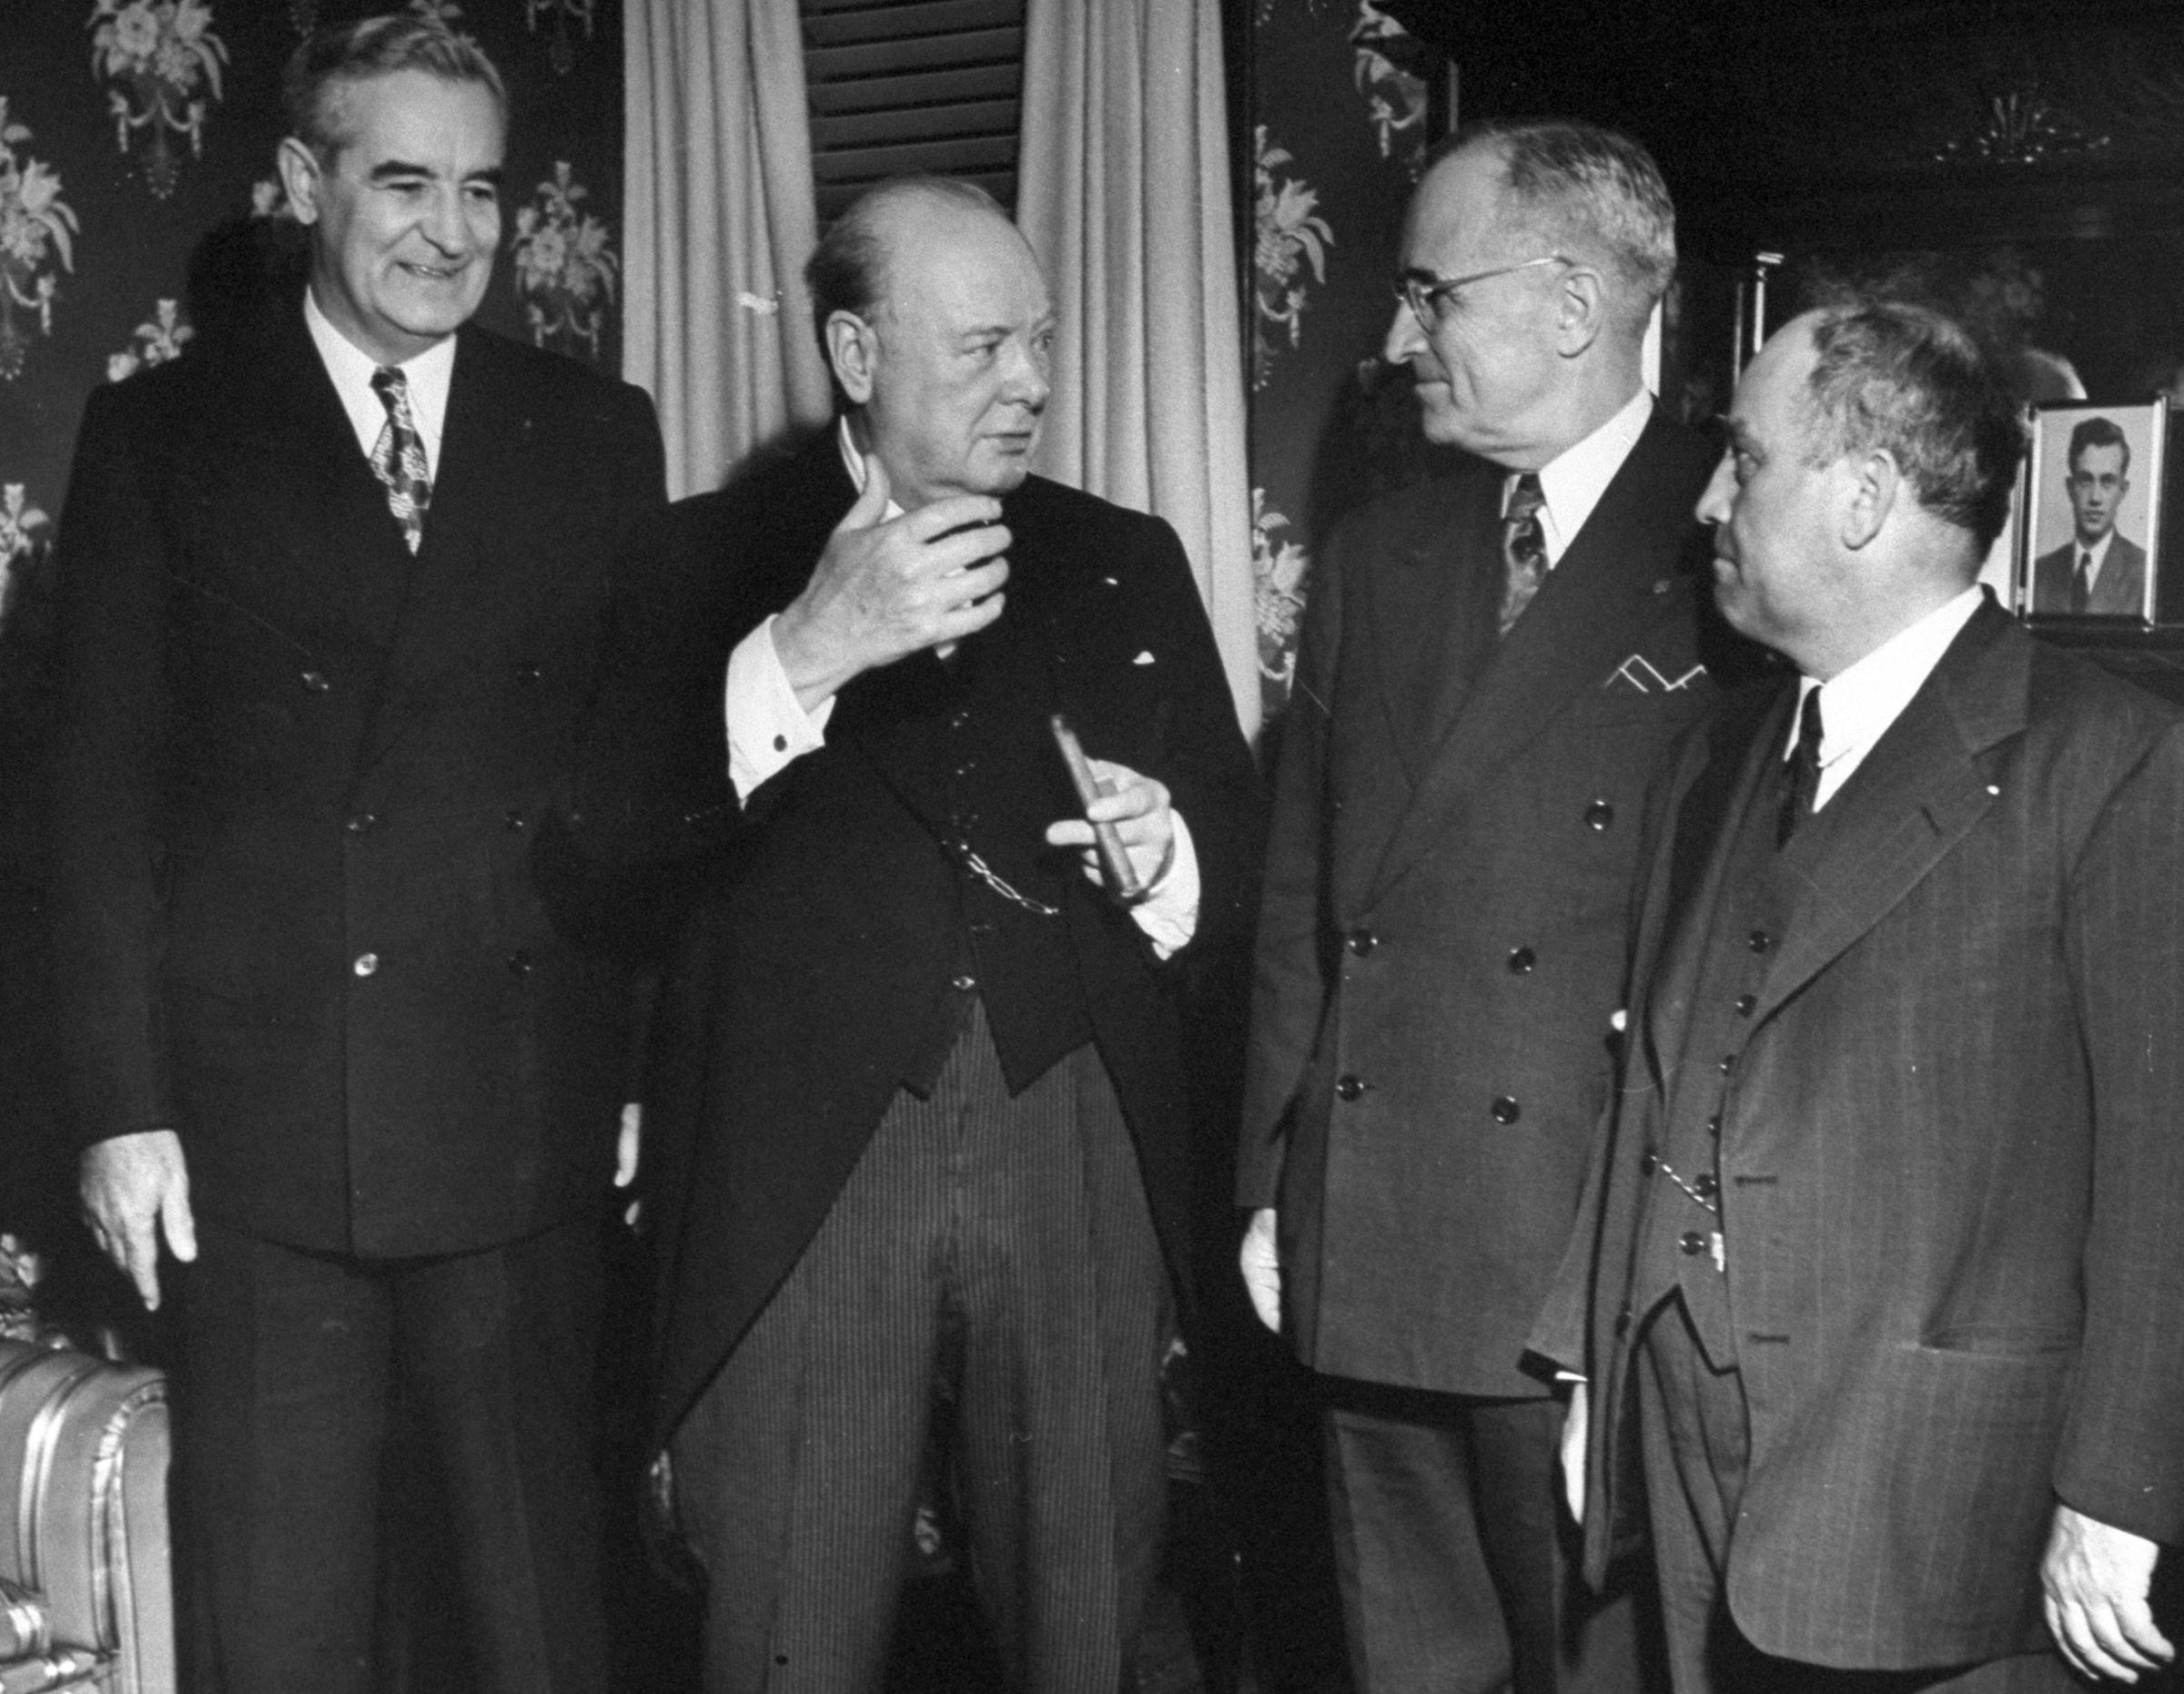 Sir Winston Churchill (2L) talking with President Harry S. Truman (2R).